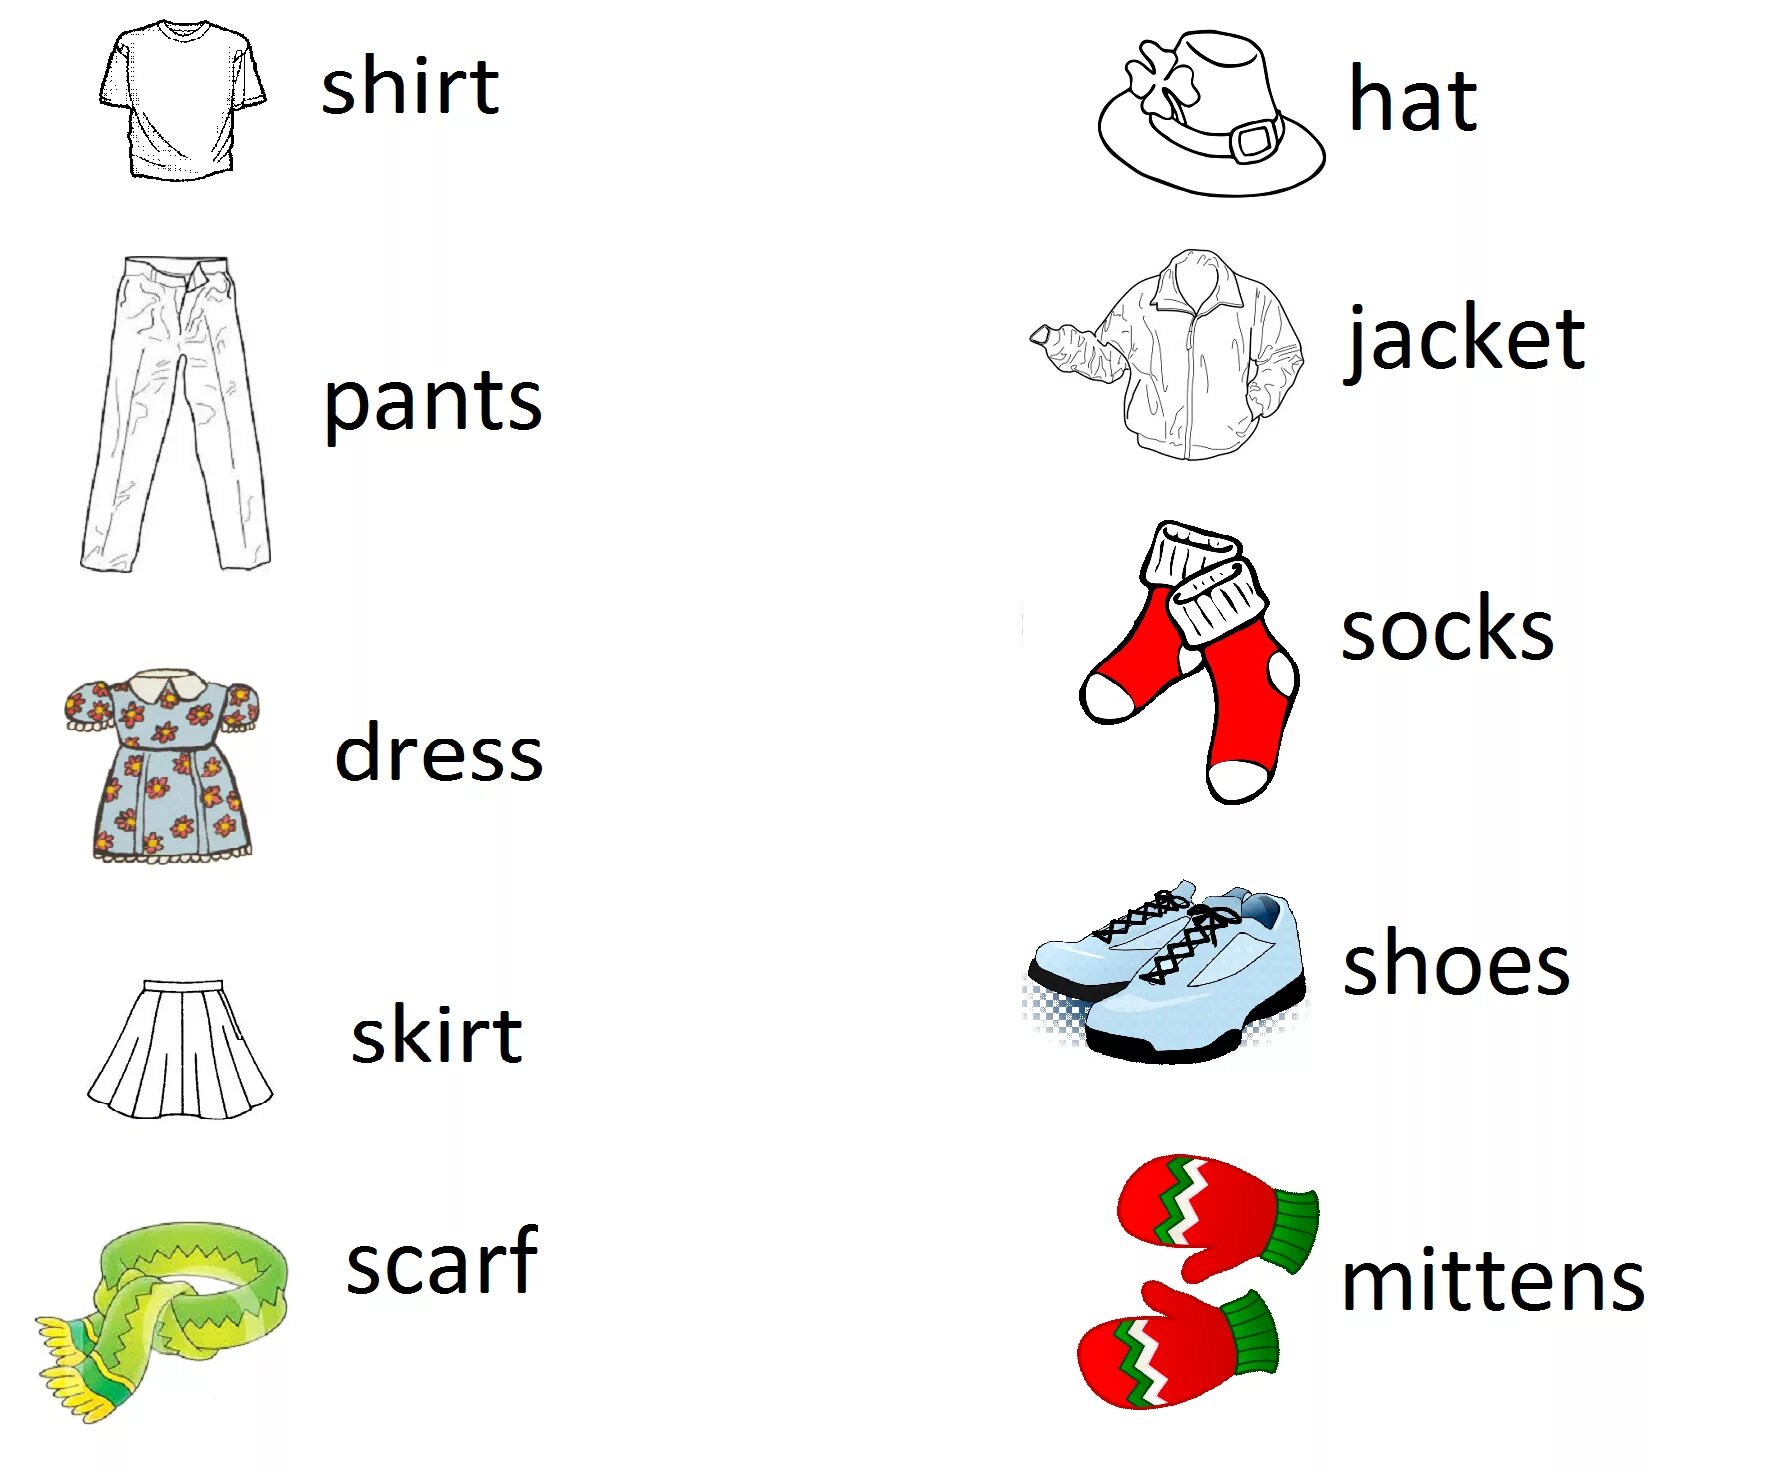 Clothes worksheets for kids. Clothes для детей на английском. Одежда на англ для детей. Одежда на английском Worksheets. Одежда на английском для детей в картинках.